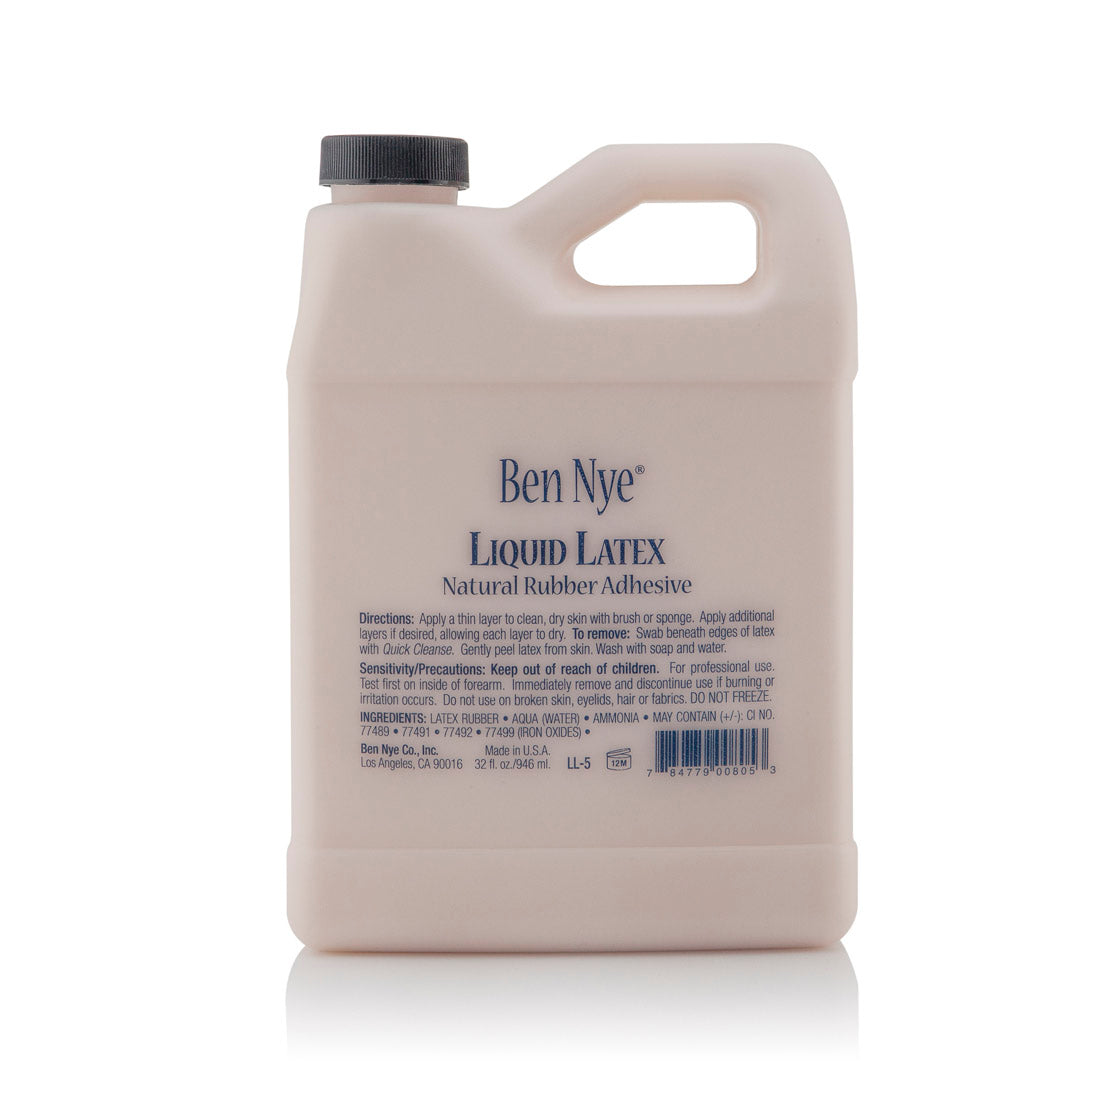 Ben Nye Liquid Latex, 1 fl oz